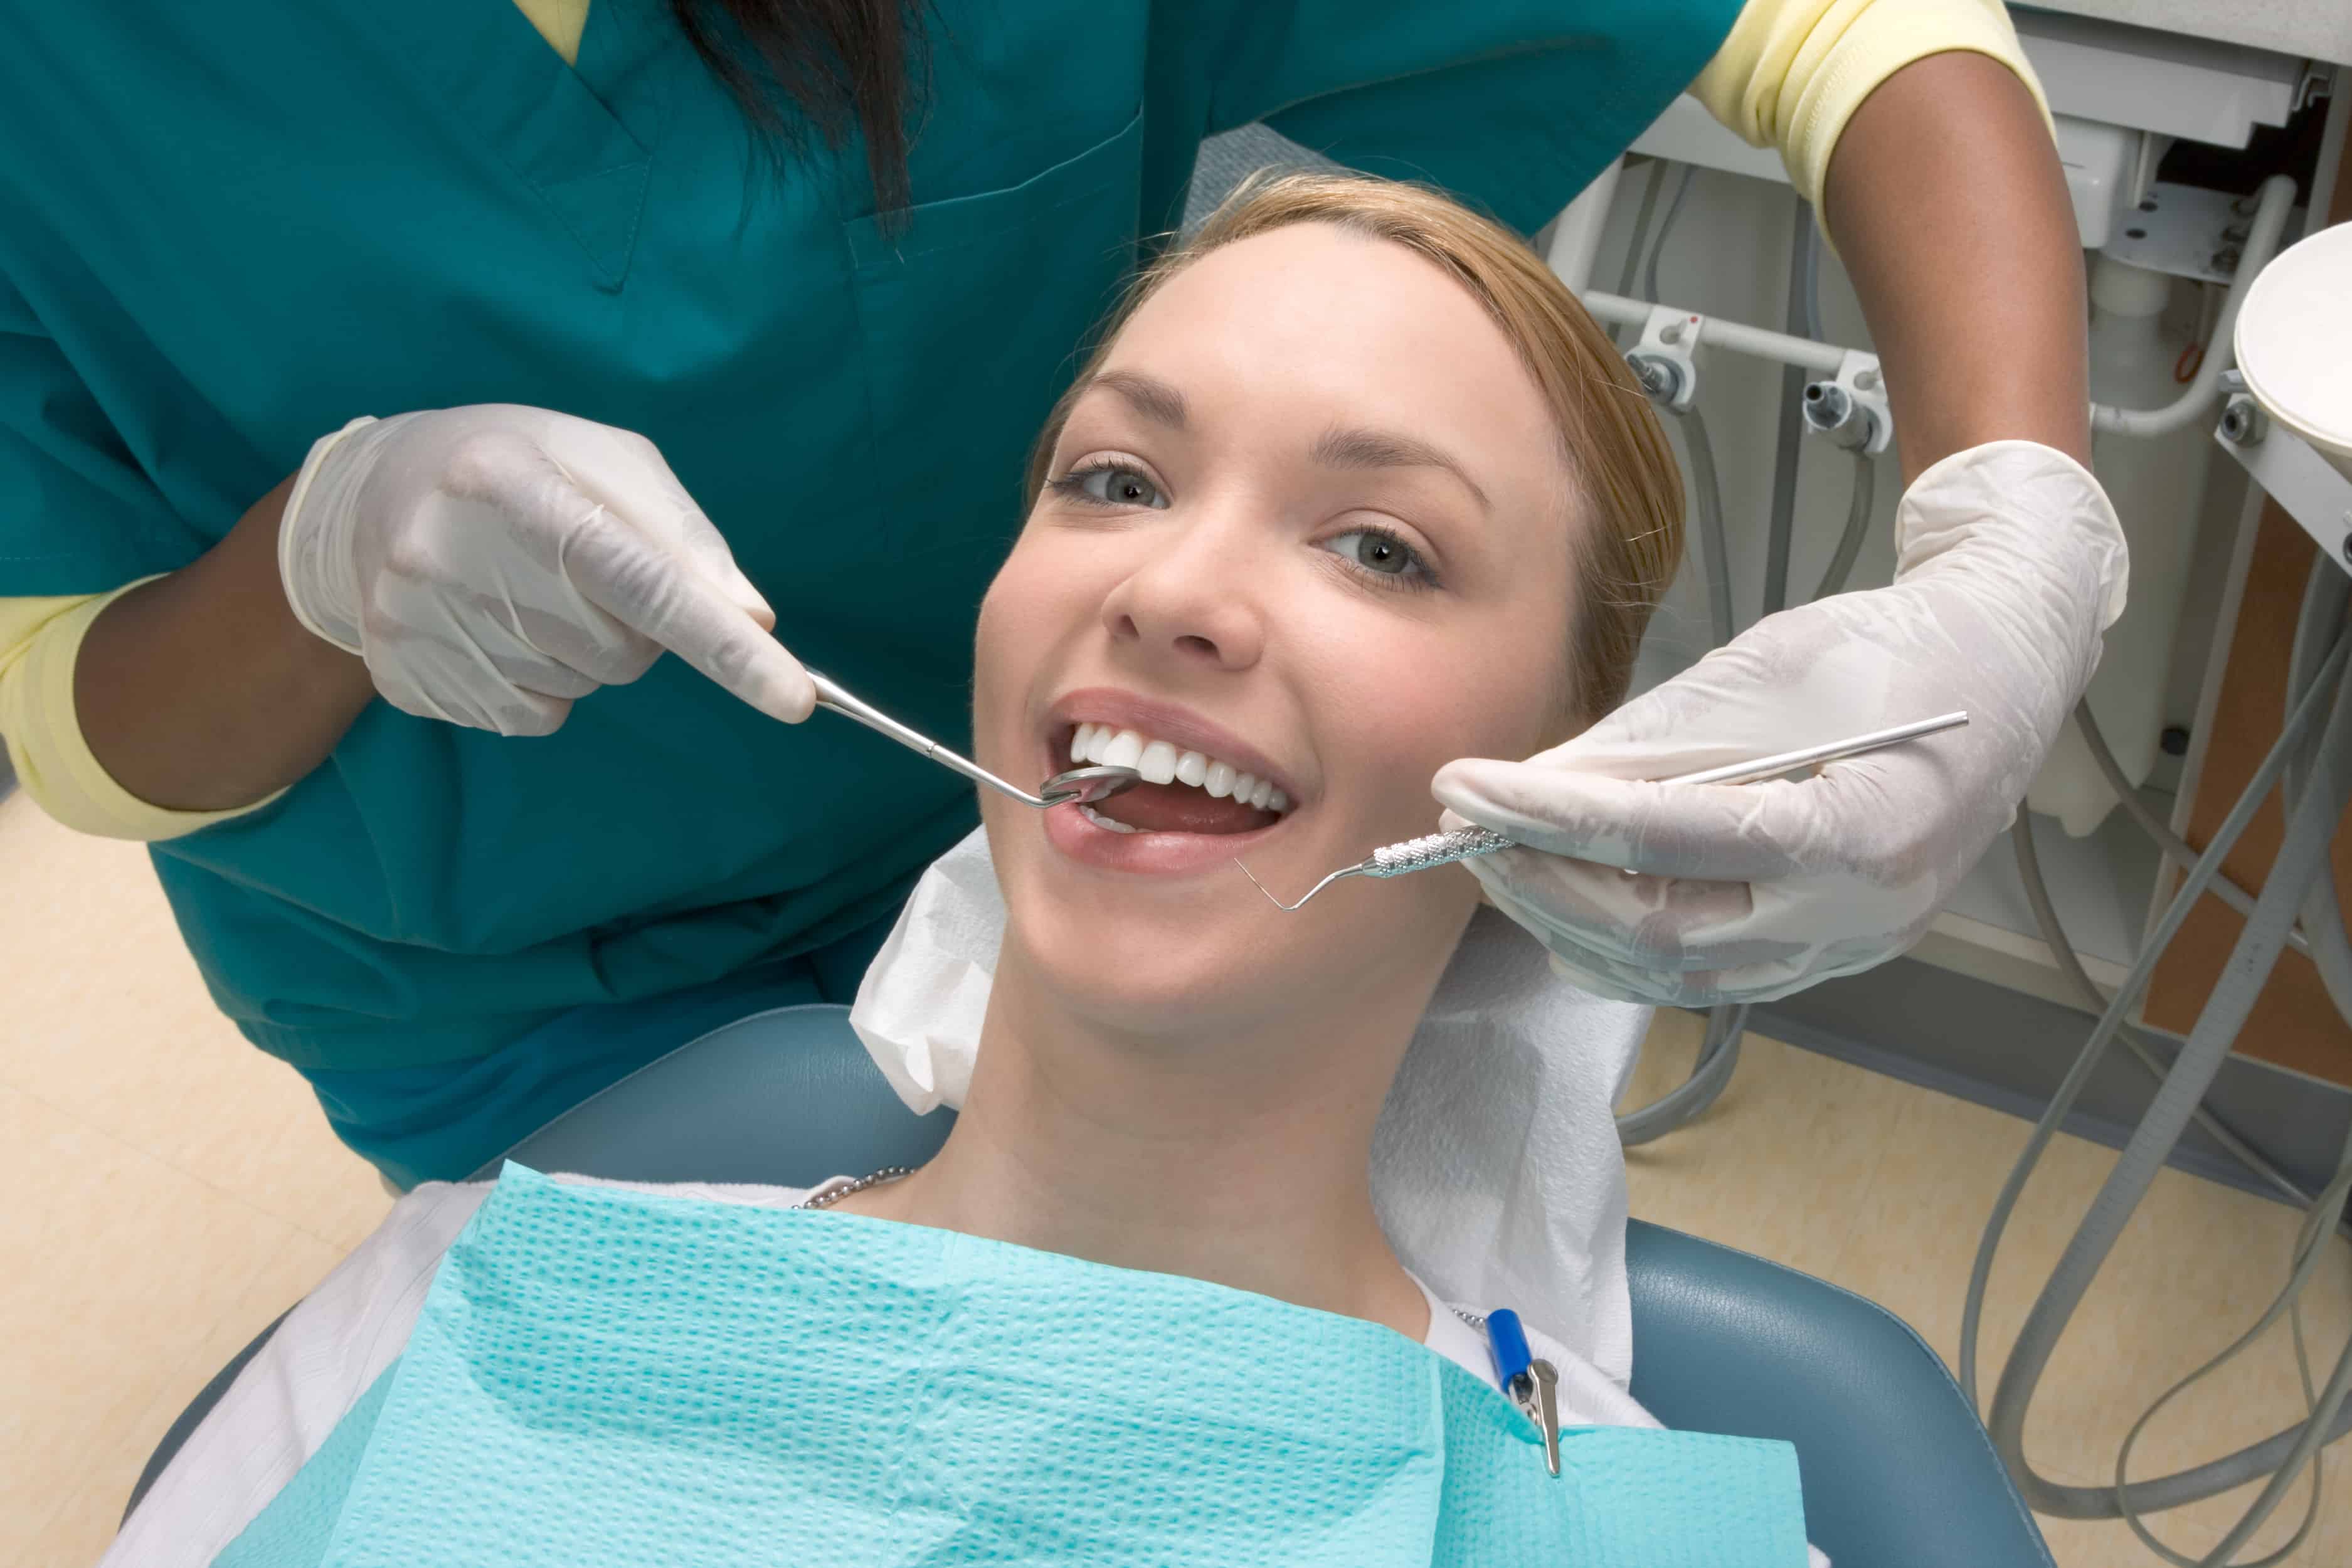 1. Dentists